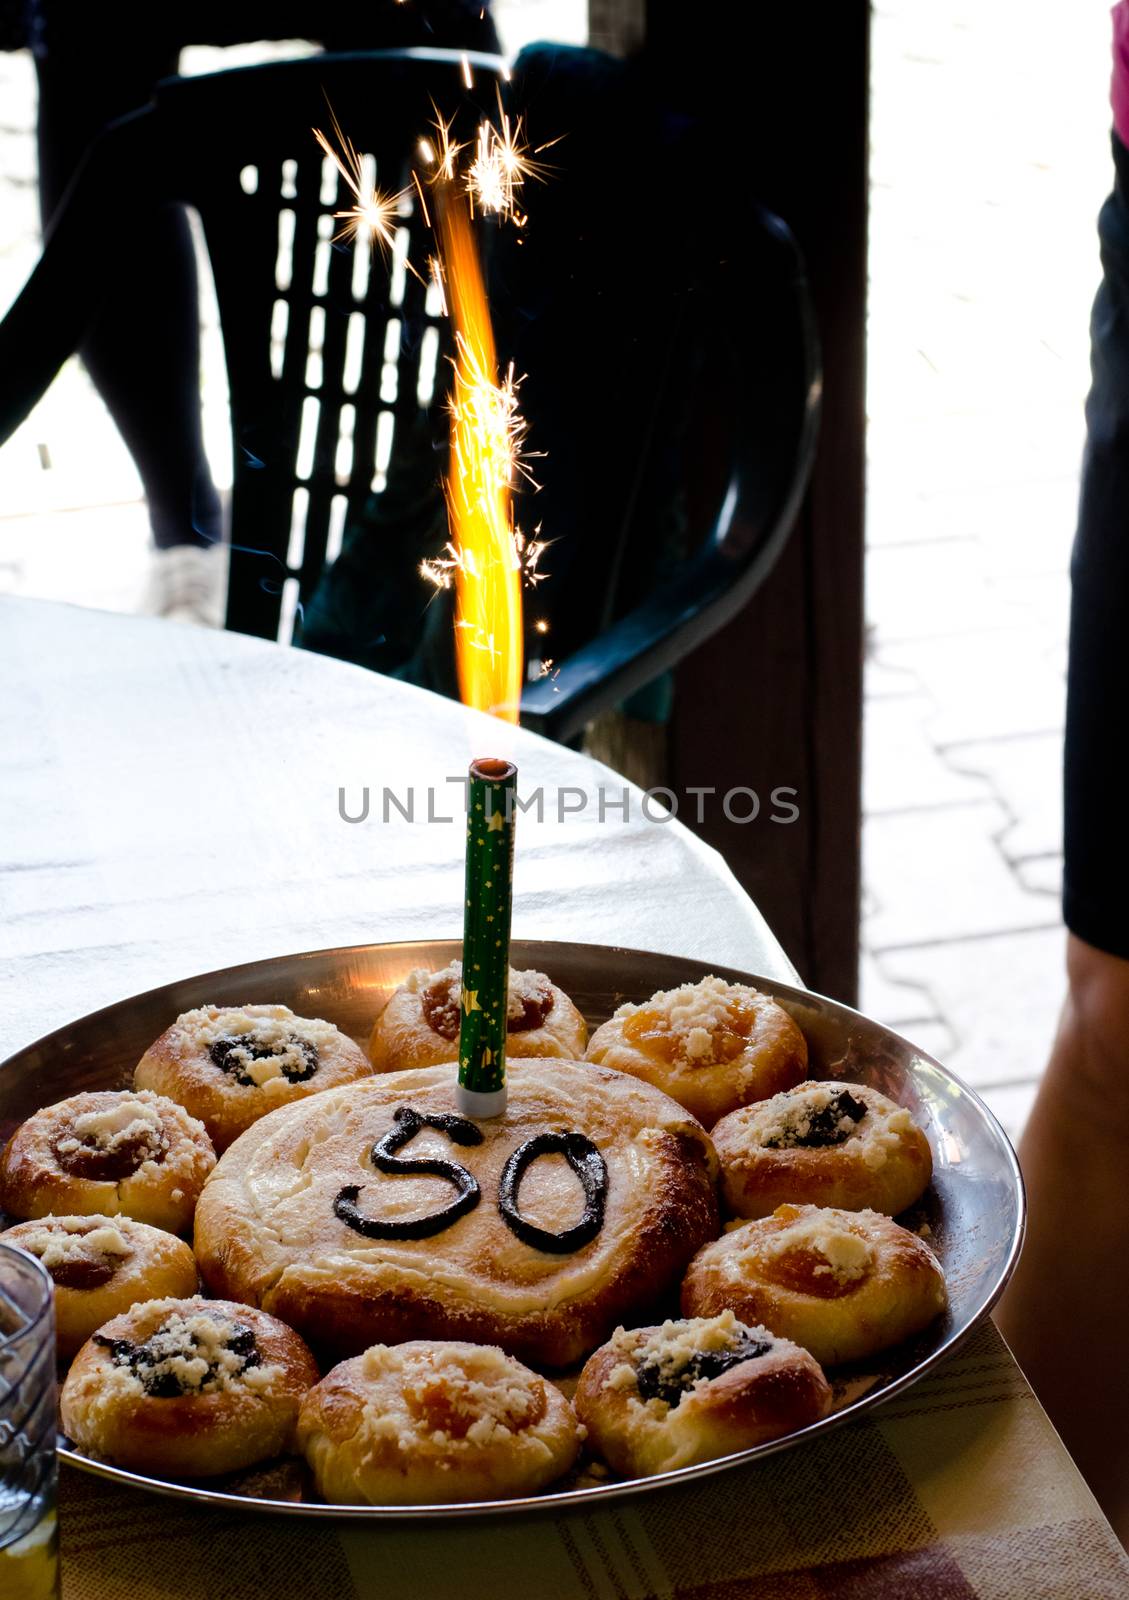 annual birthday cake by sarkao